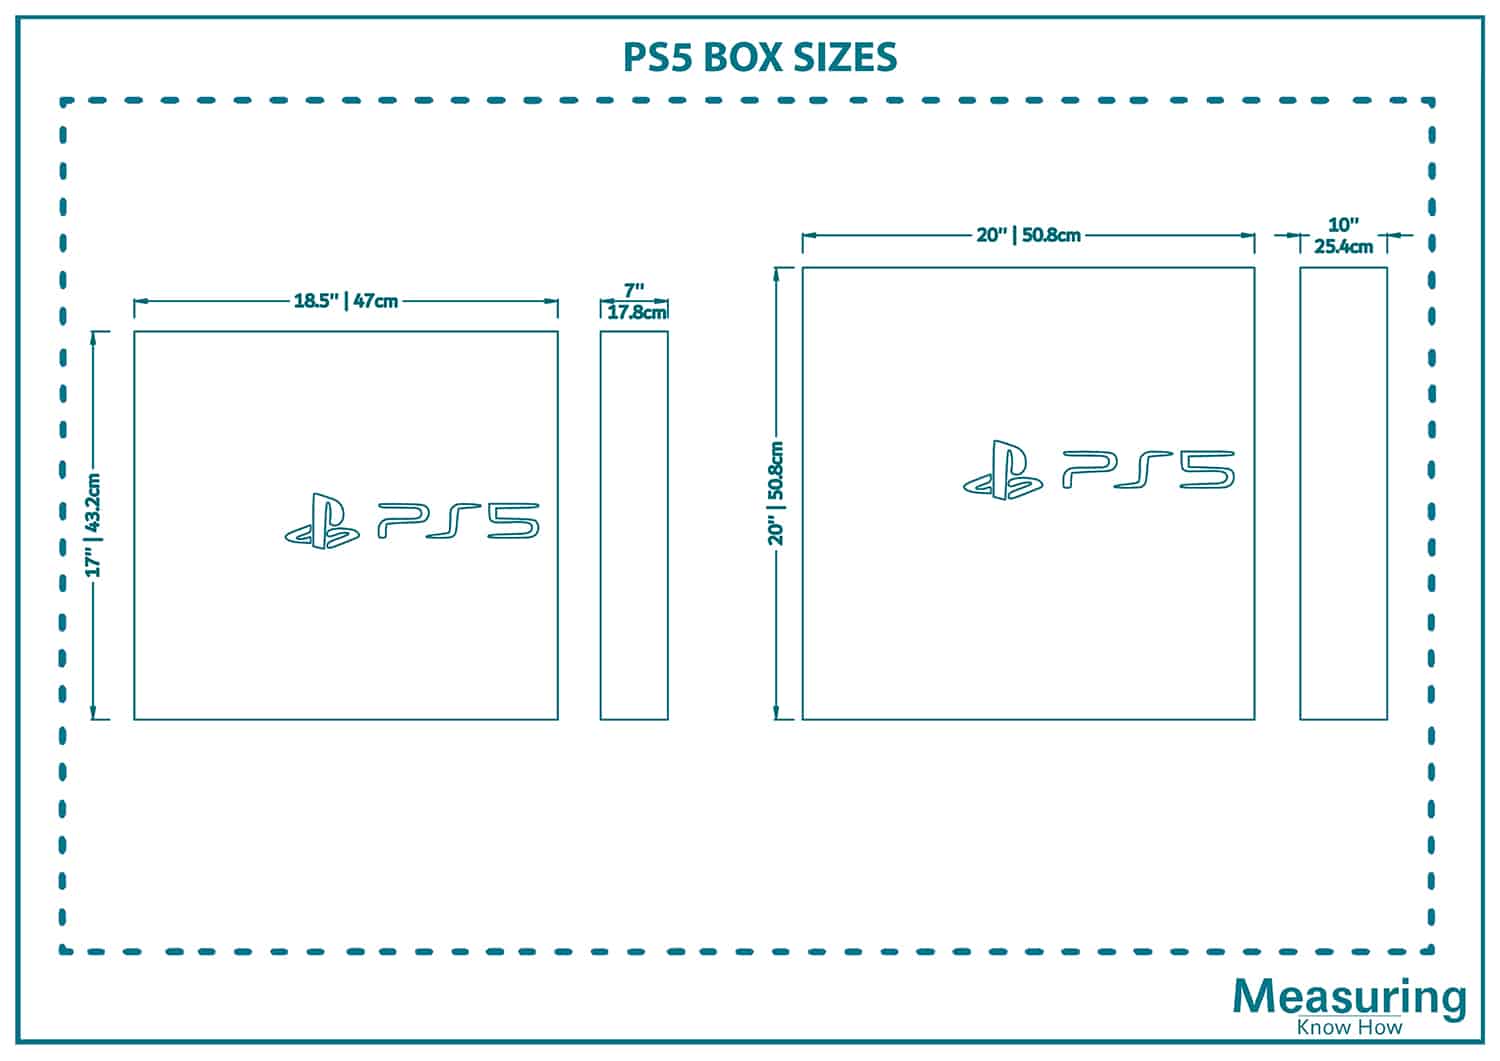 PS5 box sizes